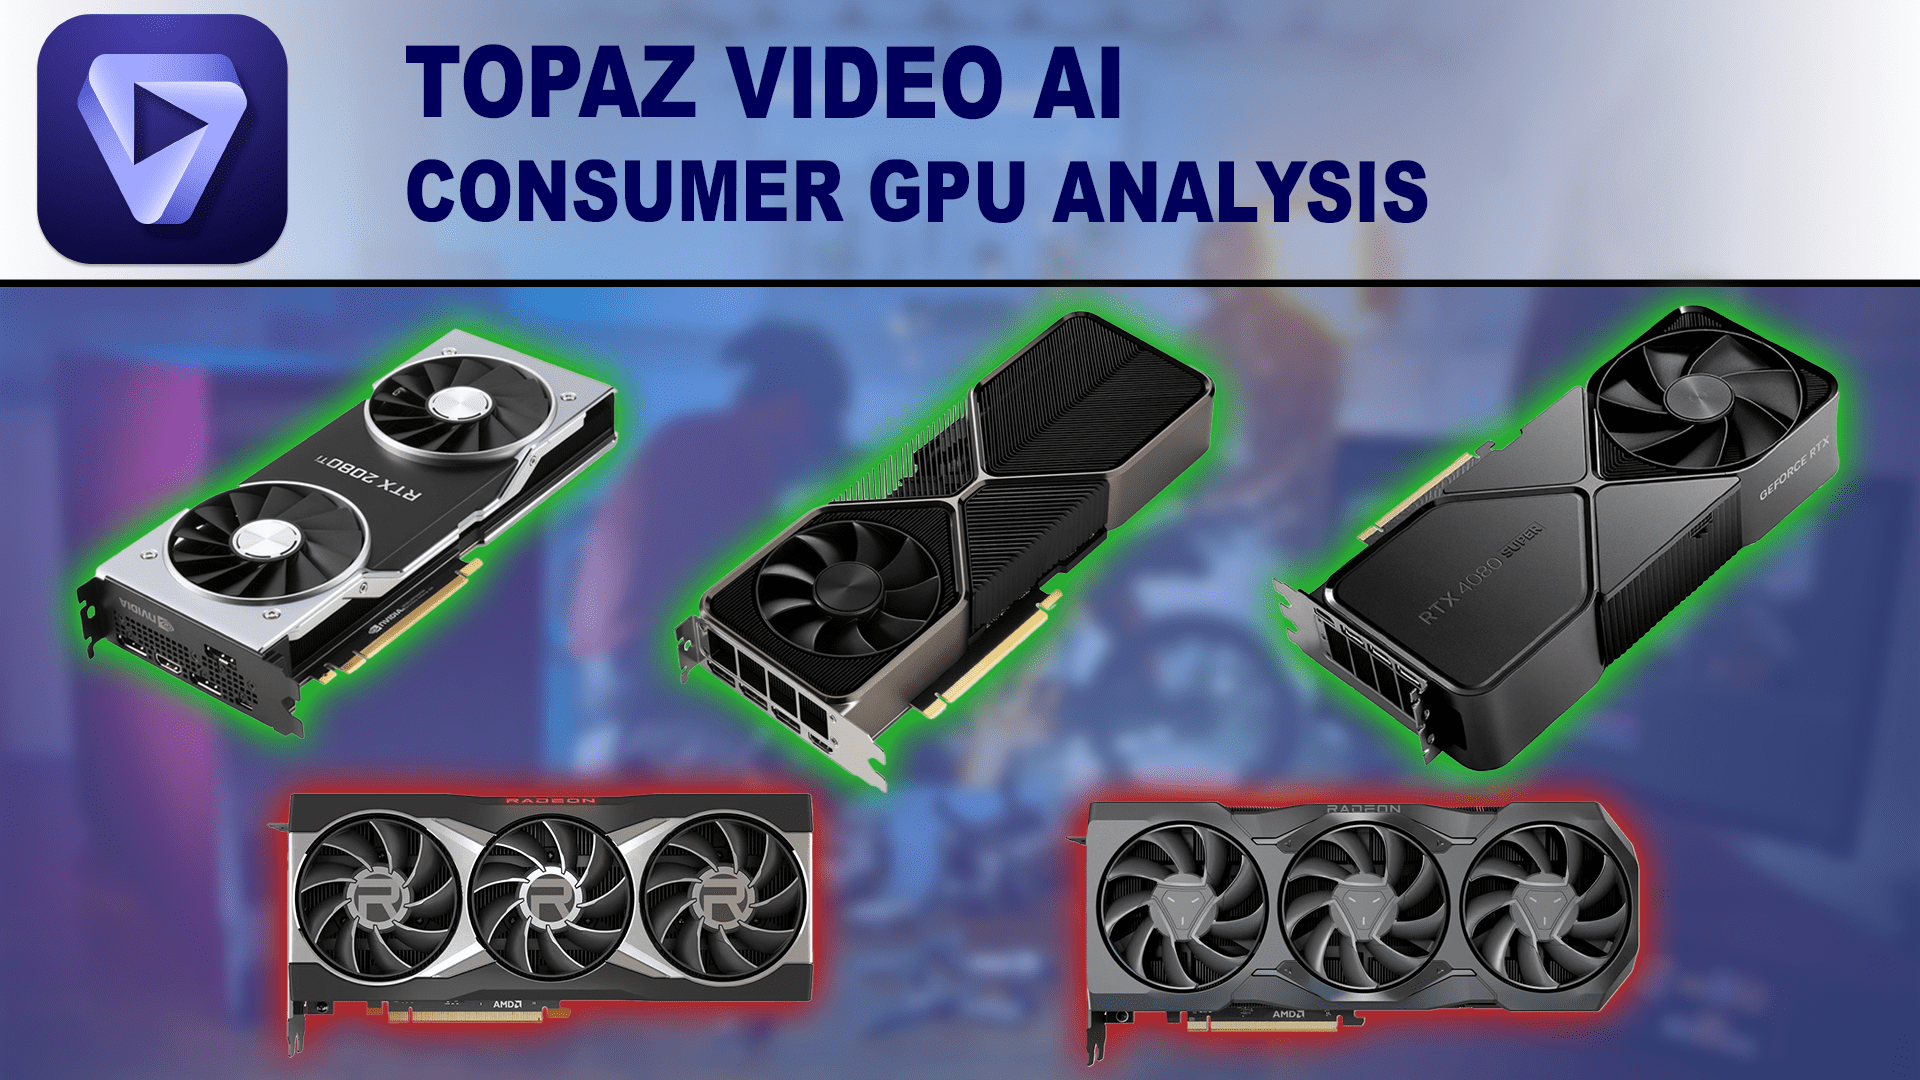 Topaz Video AI 5.1.3 Consumer GPU Performance Analysis